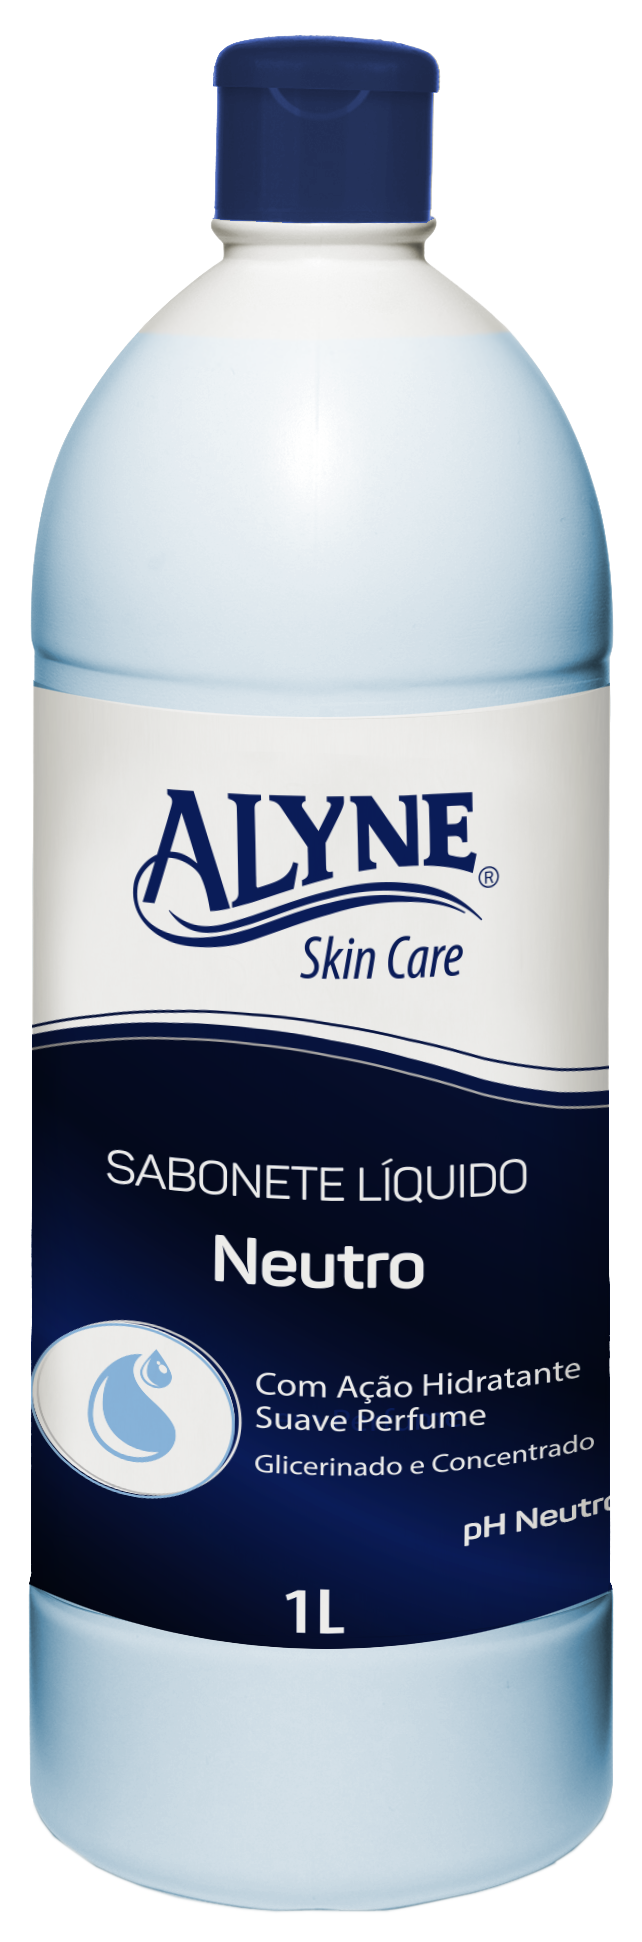 Sabonete Líquido Alyne Skin Care Neutro 1L